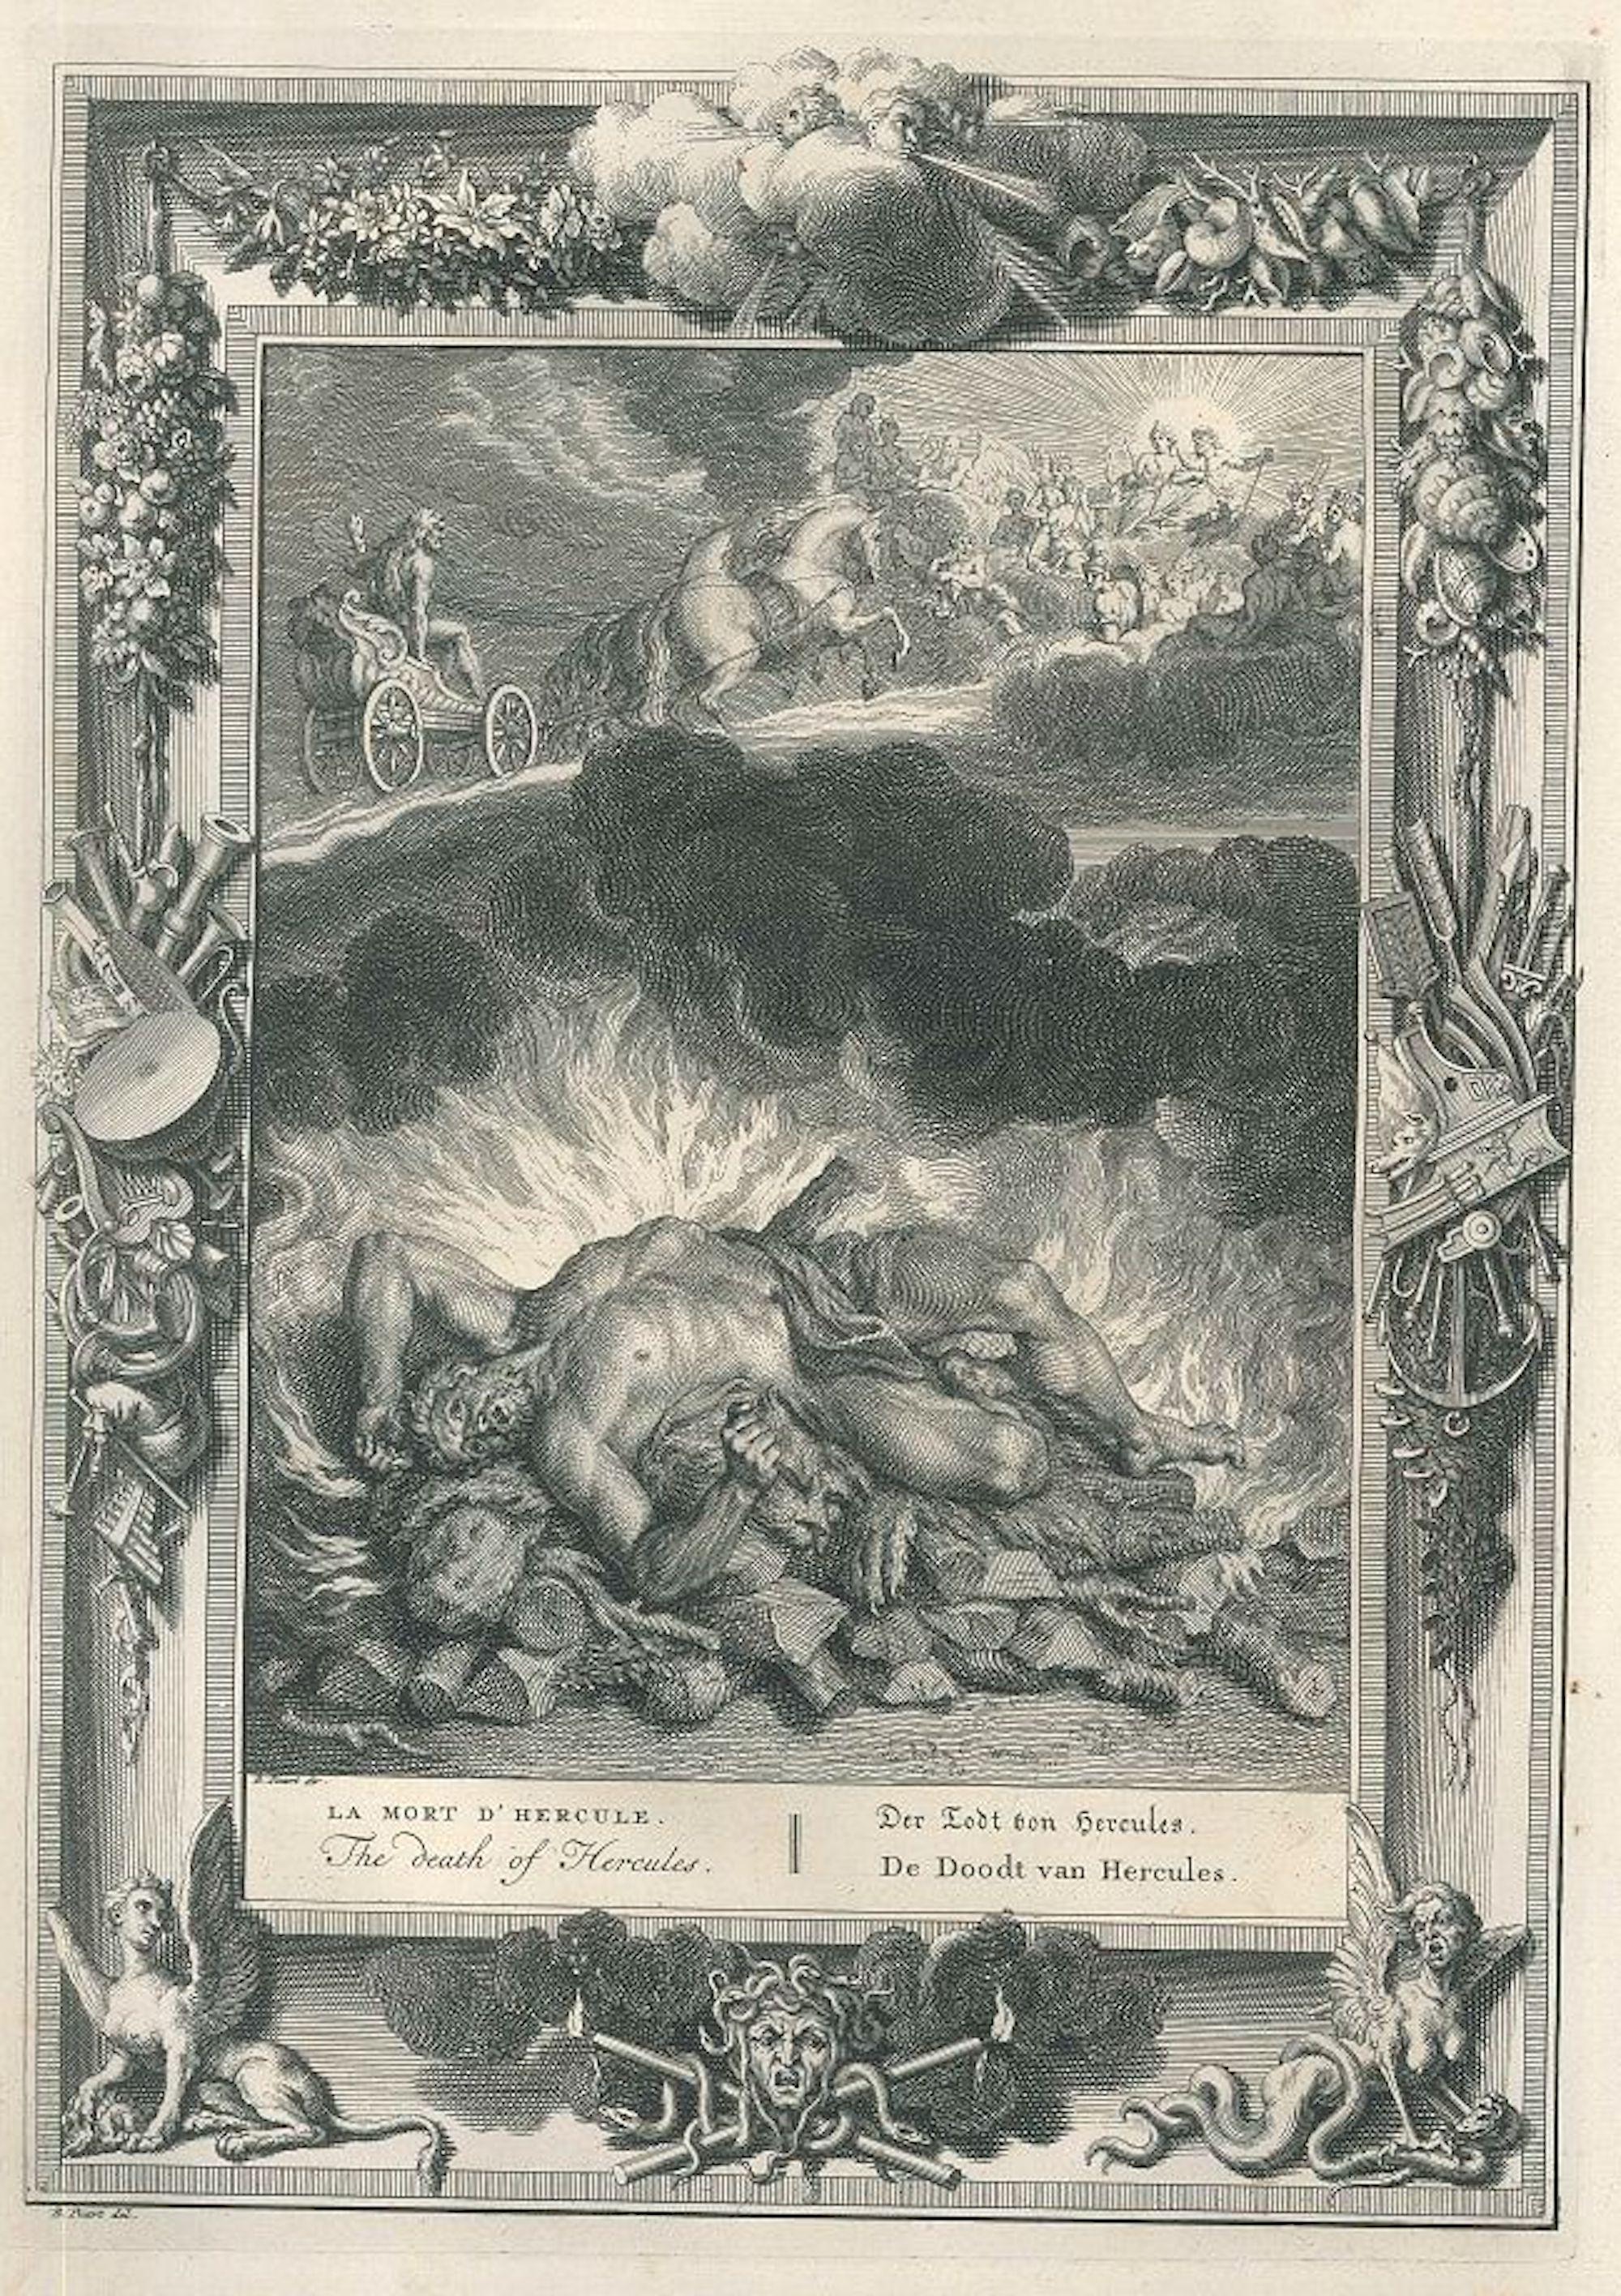 Bernard Picart Figurative Print - La Mort d'Hercule - Etching by by B. Picart - 1742